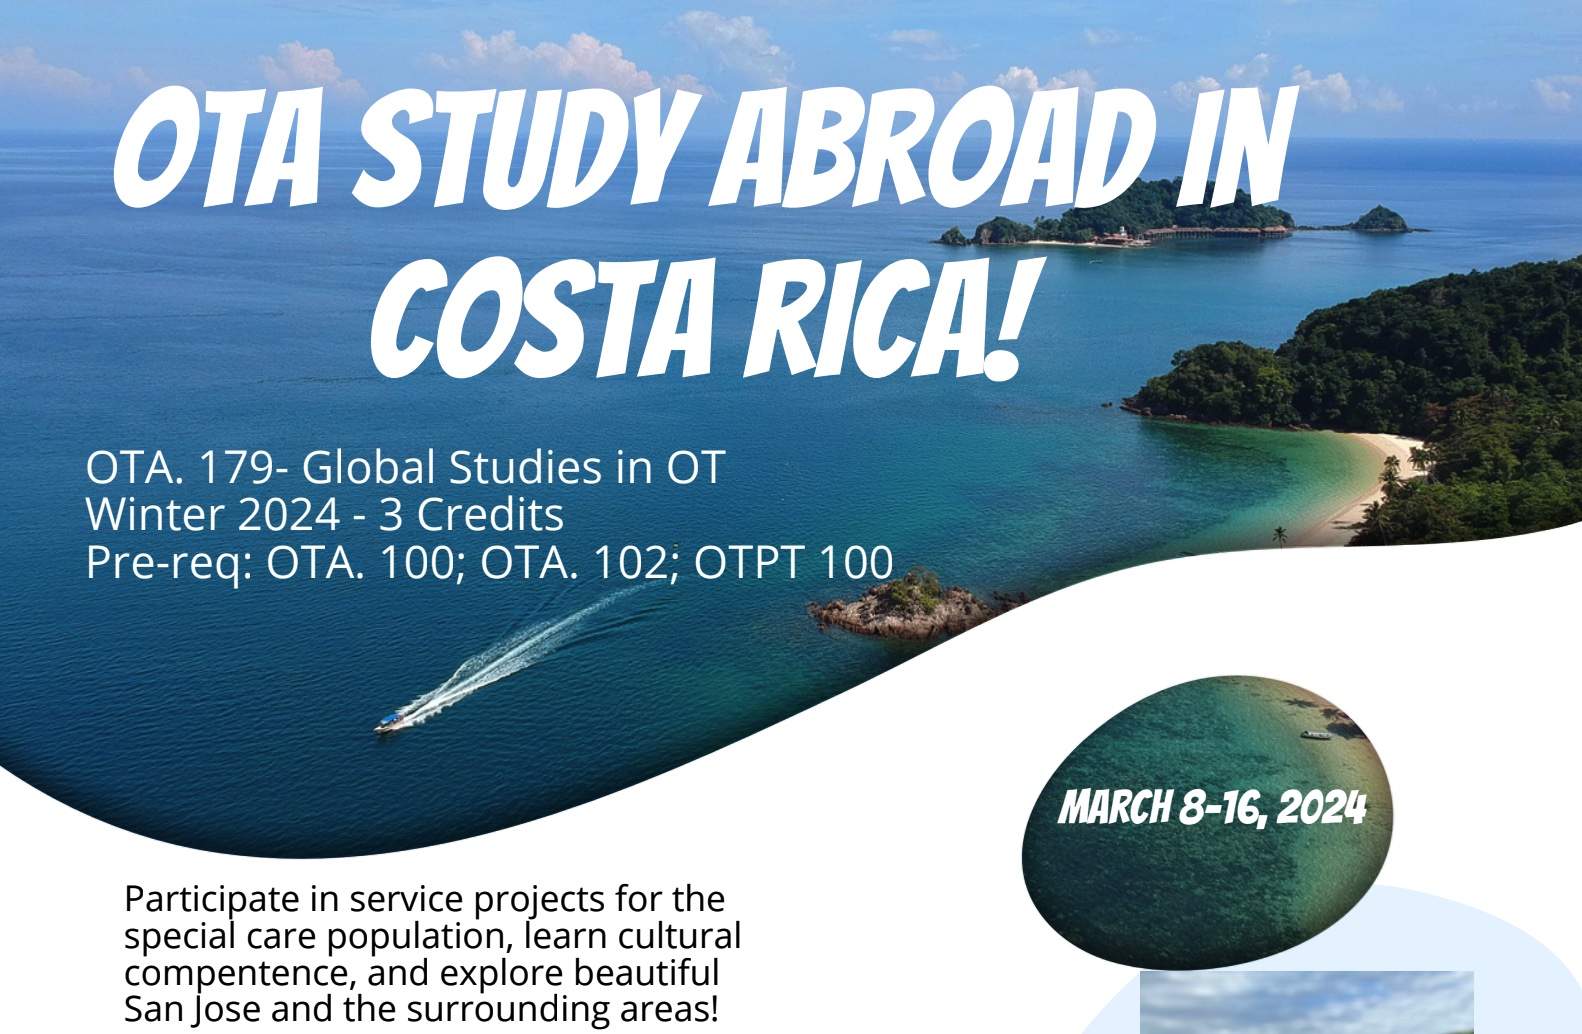 OTA study abroad in Costa Rica